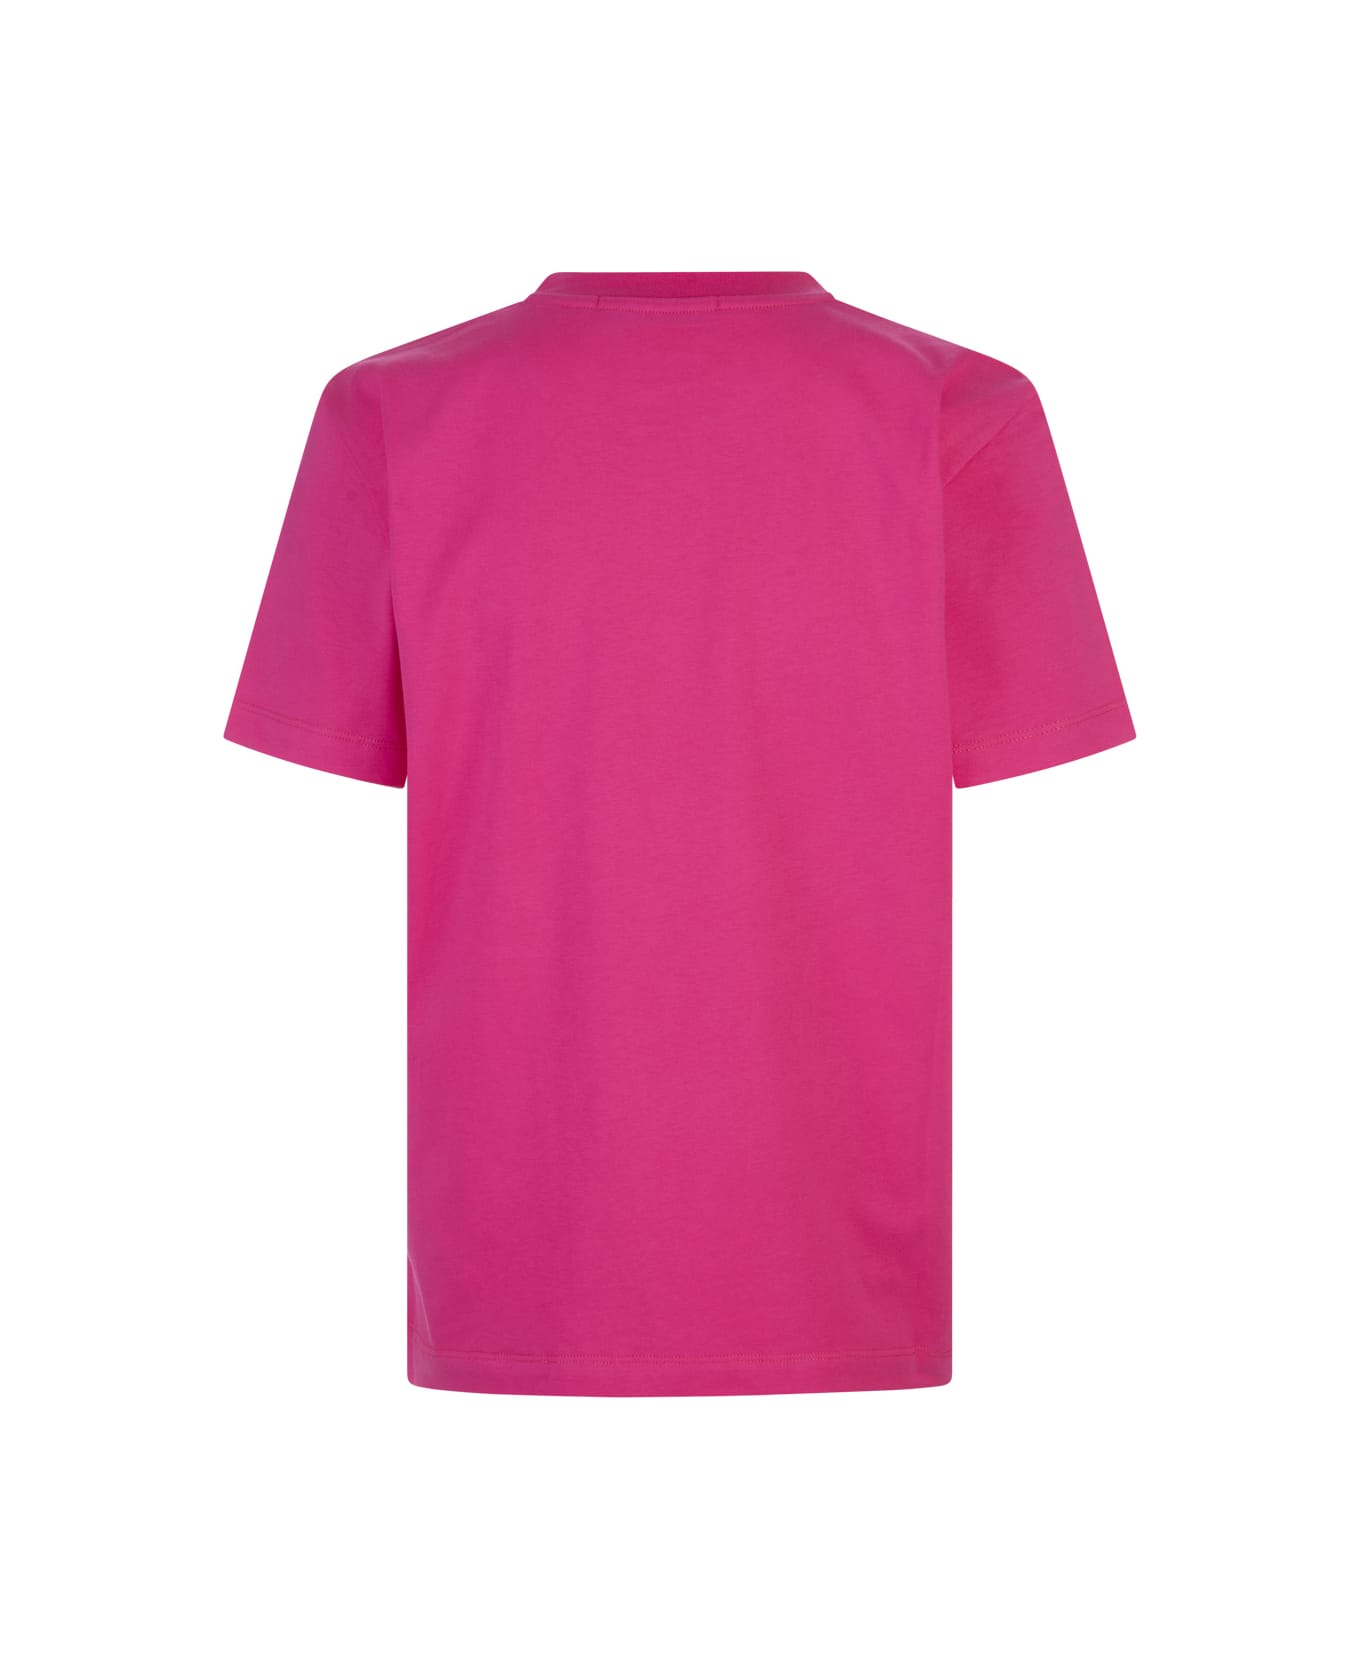 MSGM Fuchsia T-shirt With Micro Logo - Pink Tシャツ